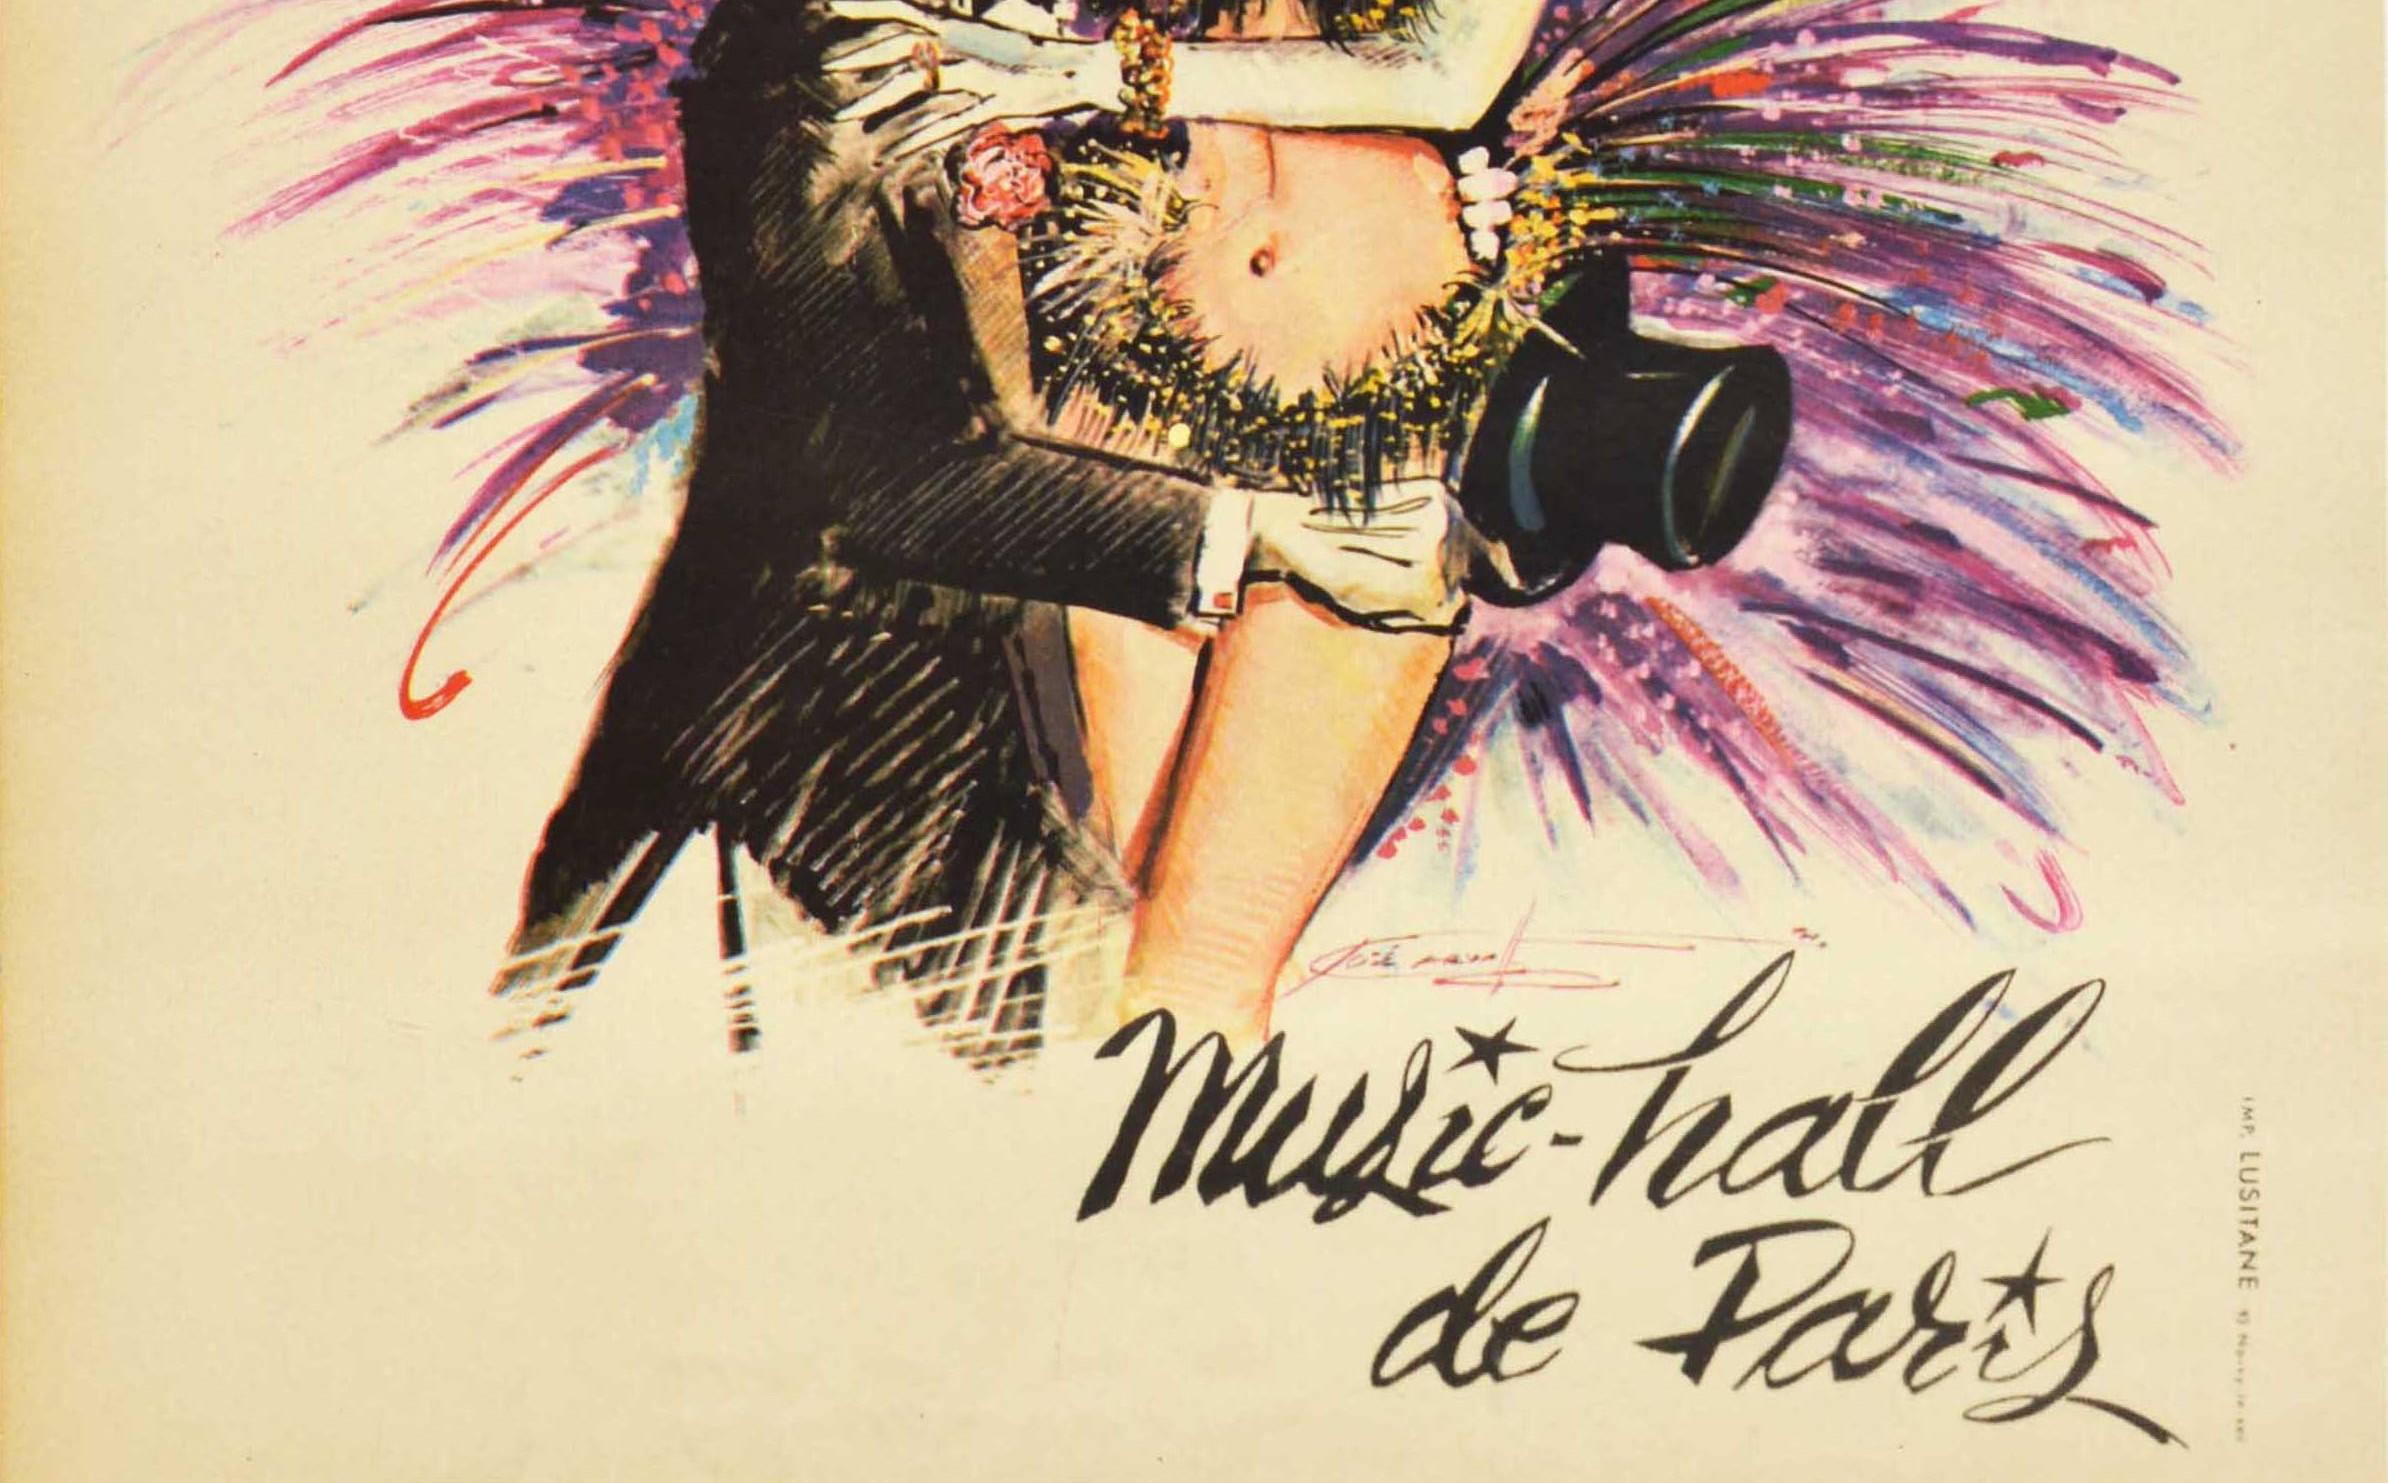 French Original Vintage Poster For Ba-Ta-Clan Music Hall De Paris Cabaret Burlesque Art